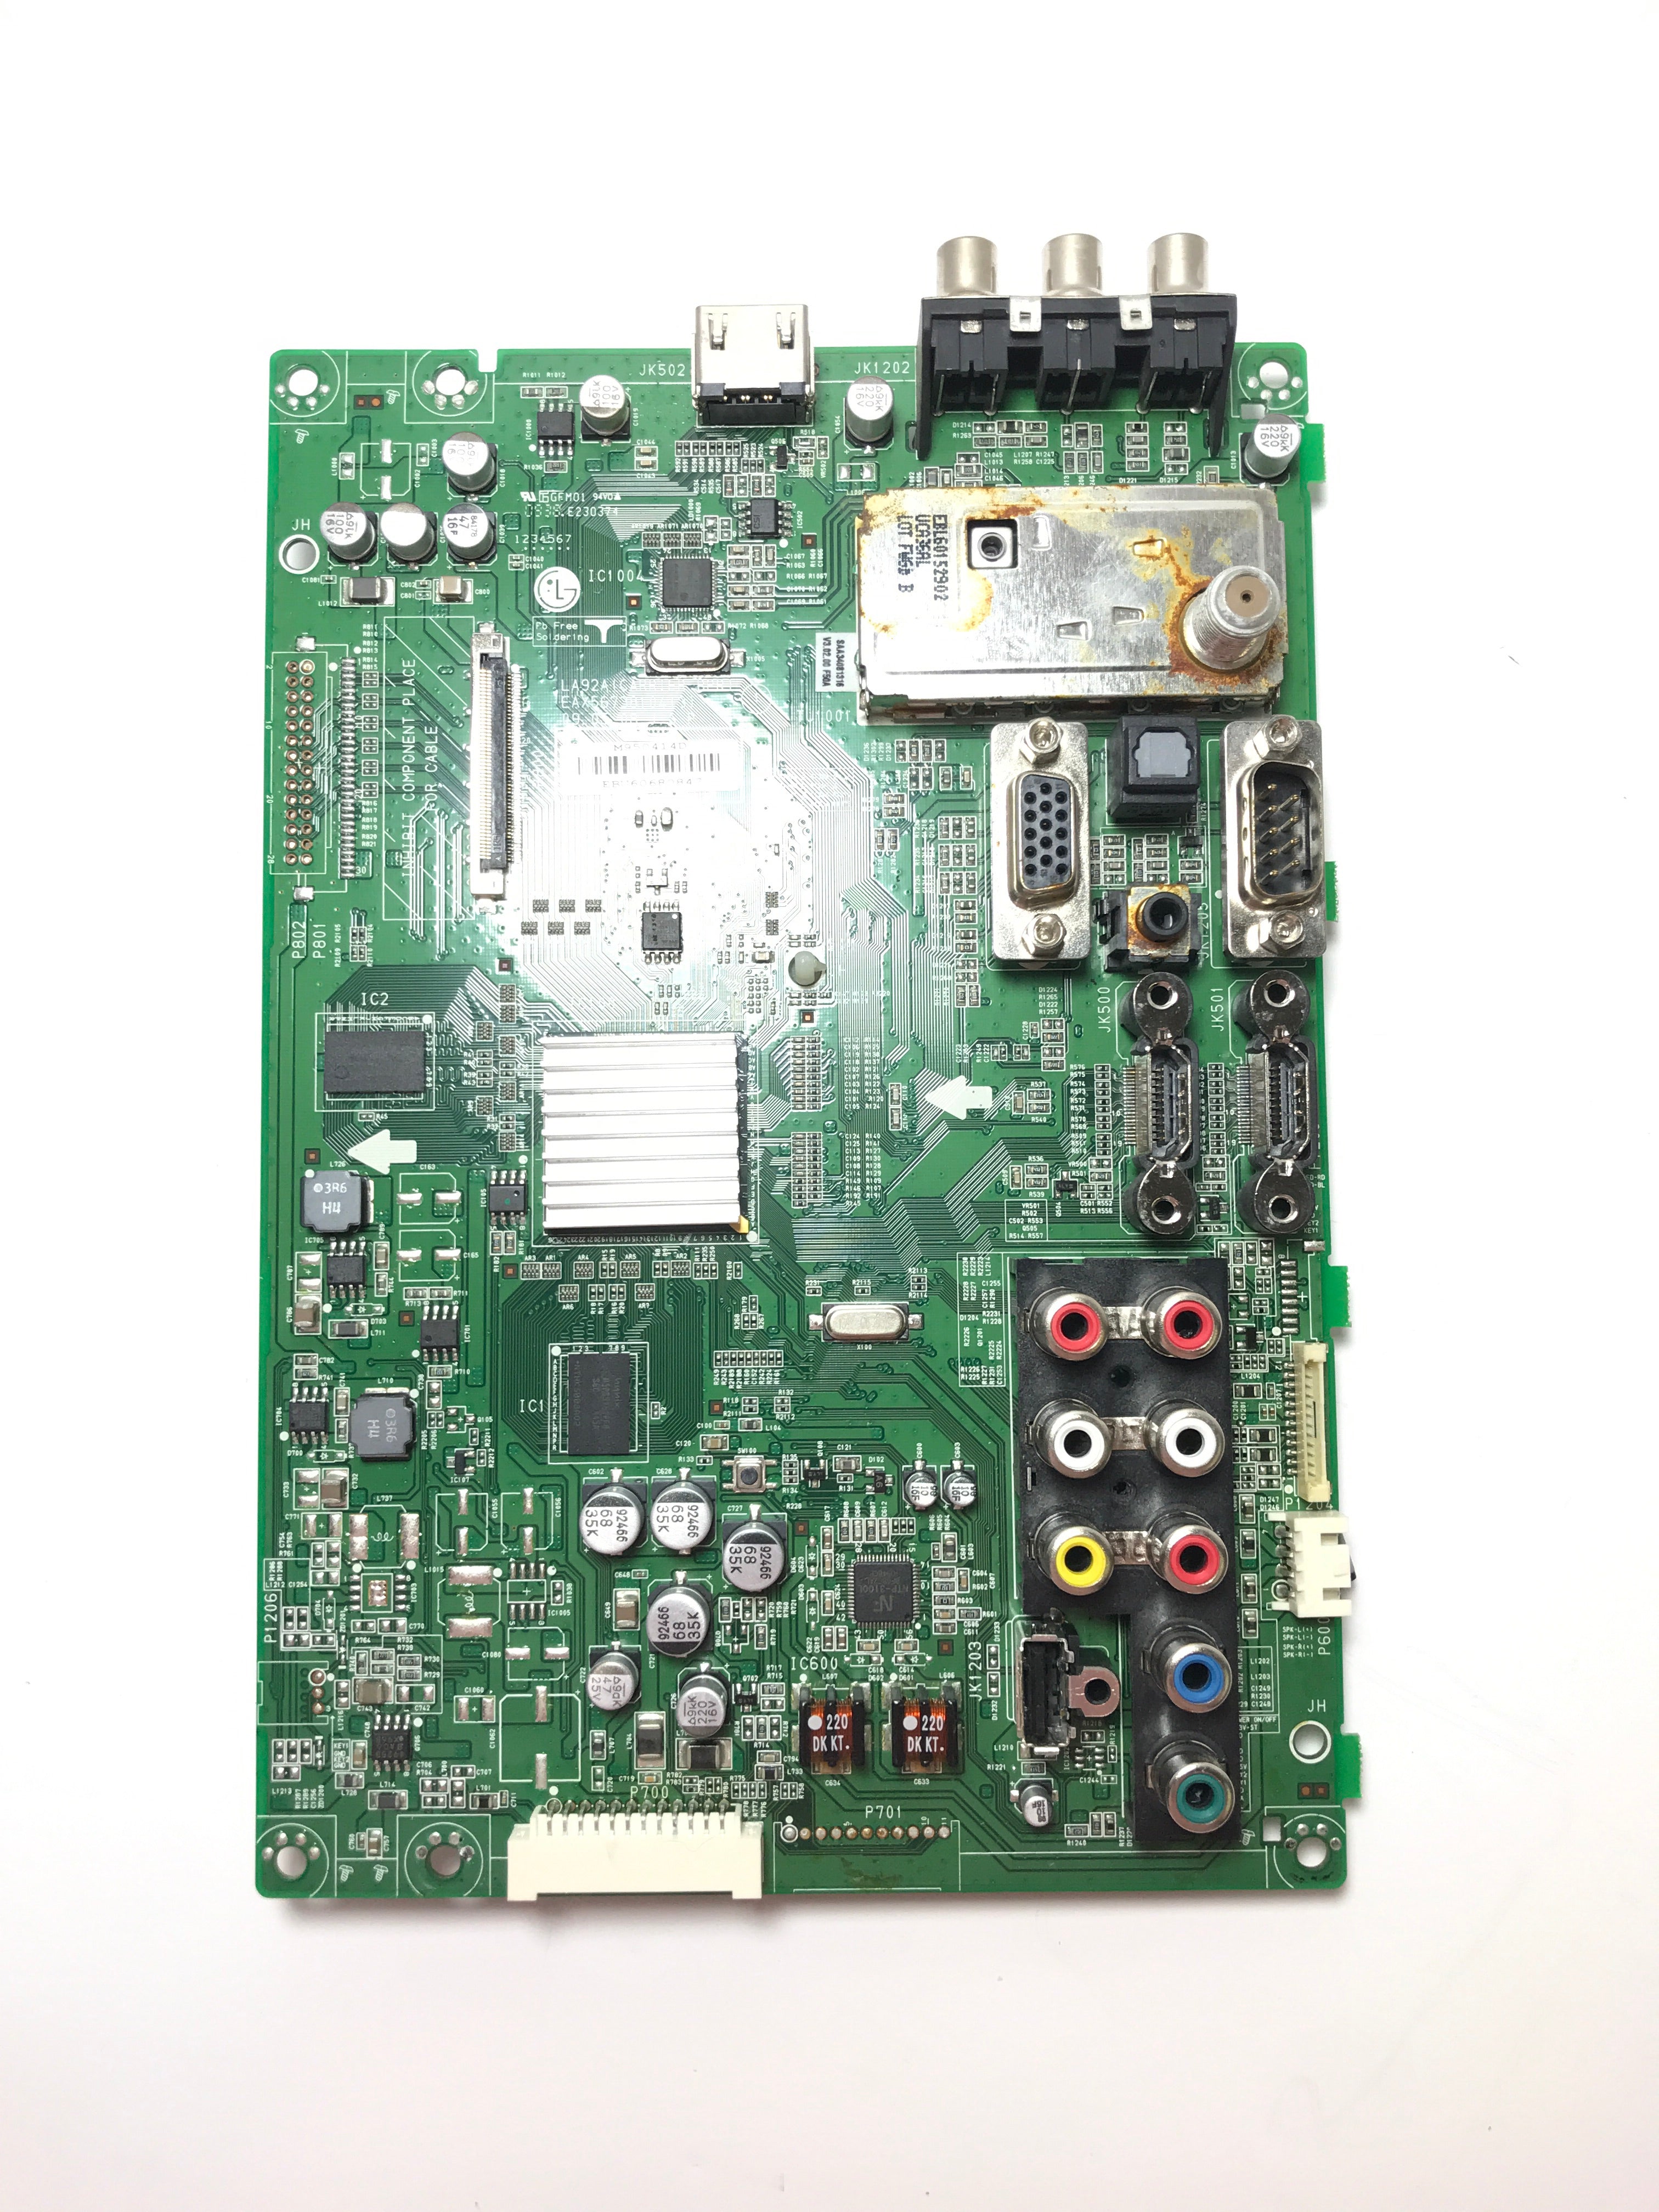 LG EBU60680847 Main Board for 32LH30-UA